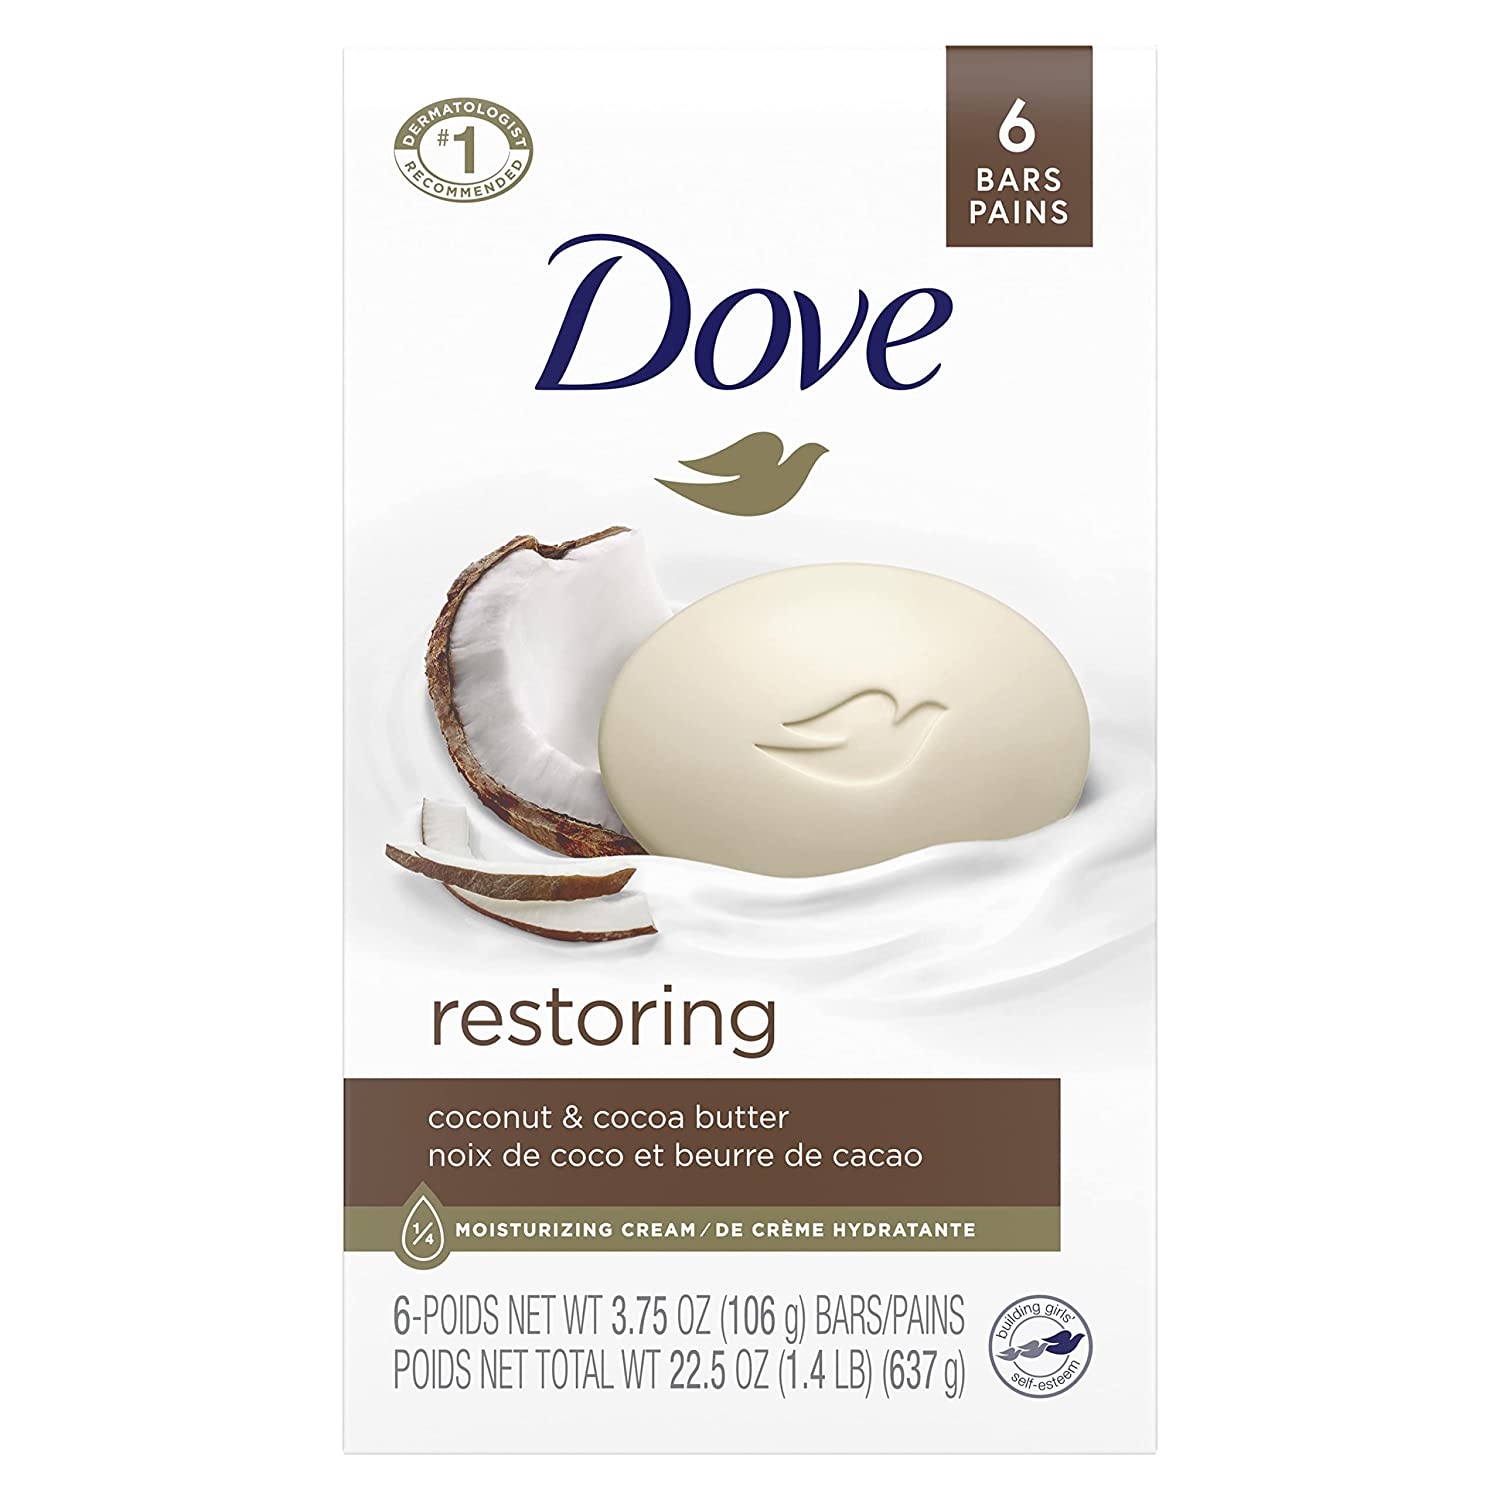 Dove Beauty Bar For Softer Skin Coconut Milk More Moisturizing Than Bar Soap, Pack of 6 Bars - 22.5Oz (637g)